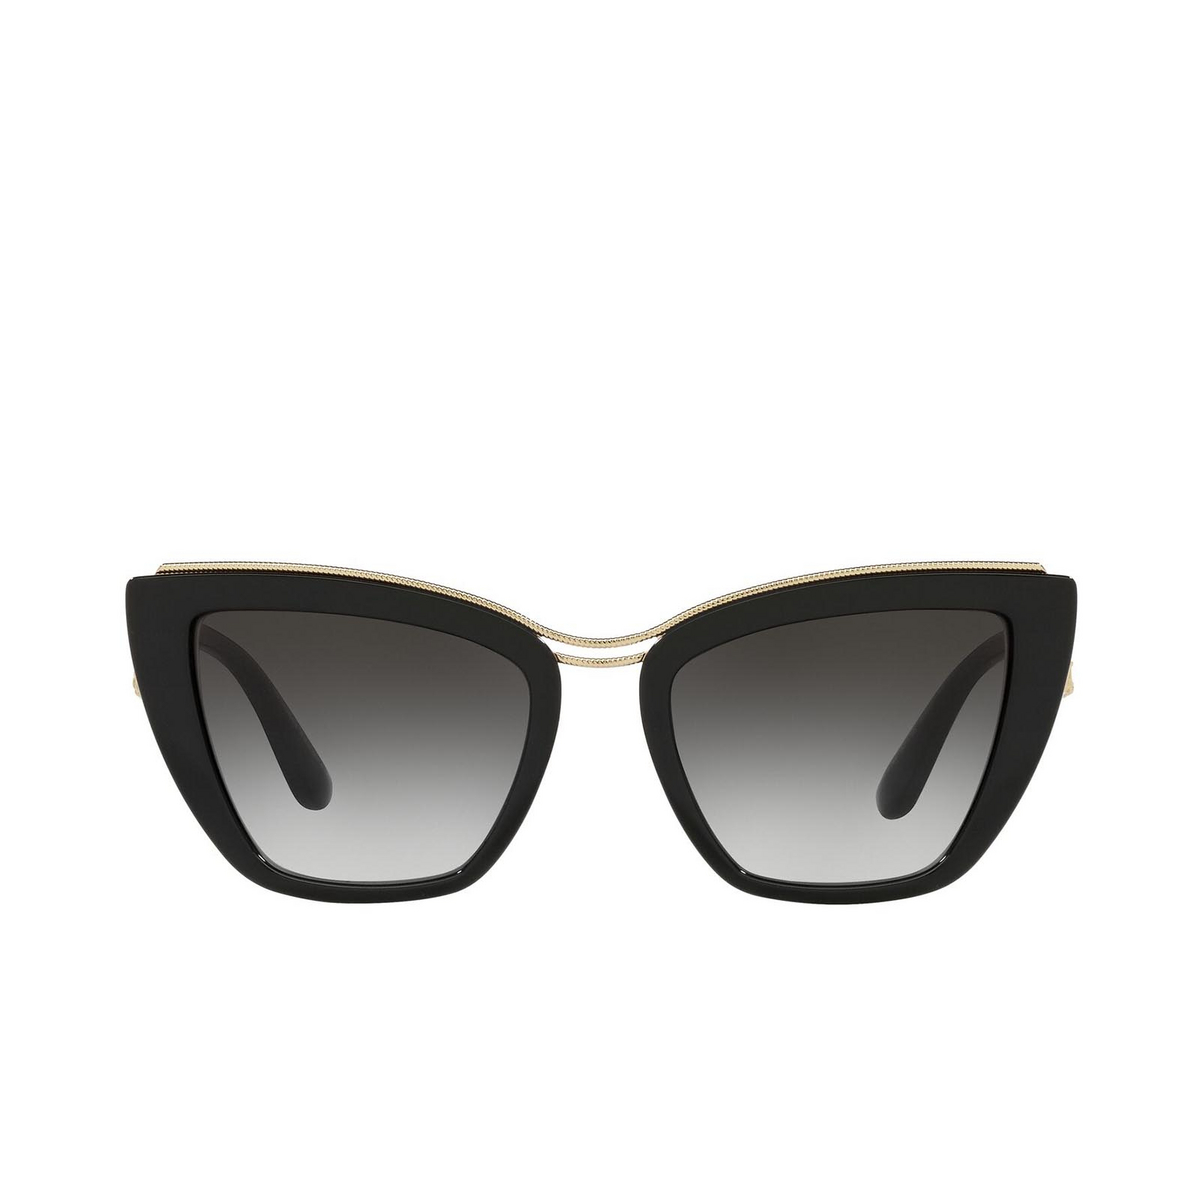 Dolce & Gabbana DG6144 Sunglasses 501/8G Black - front view